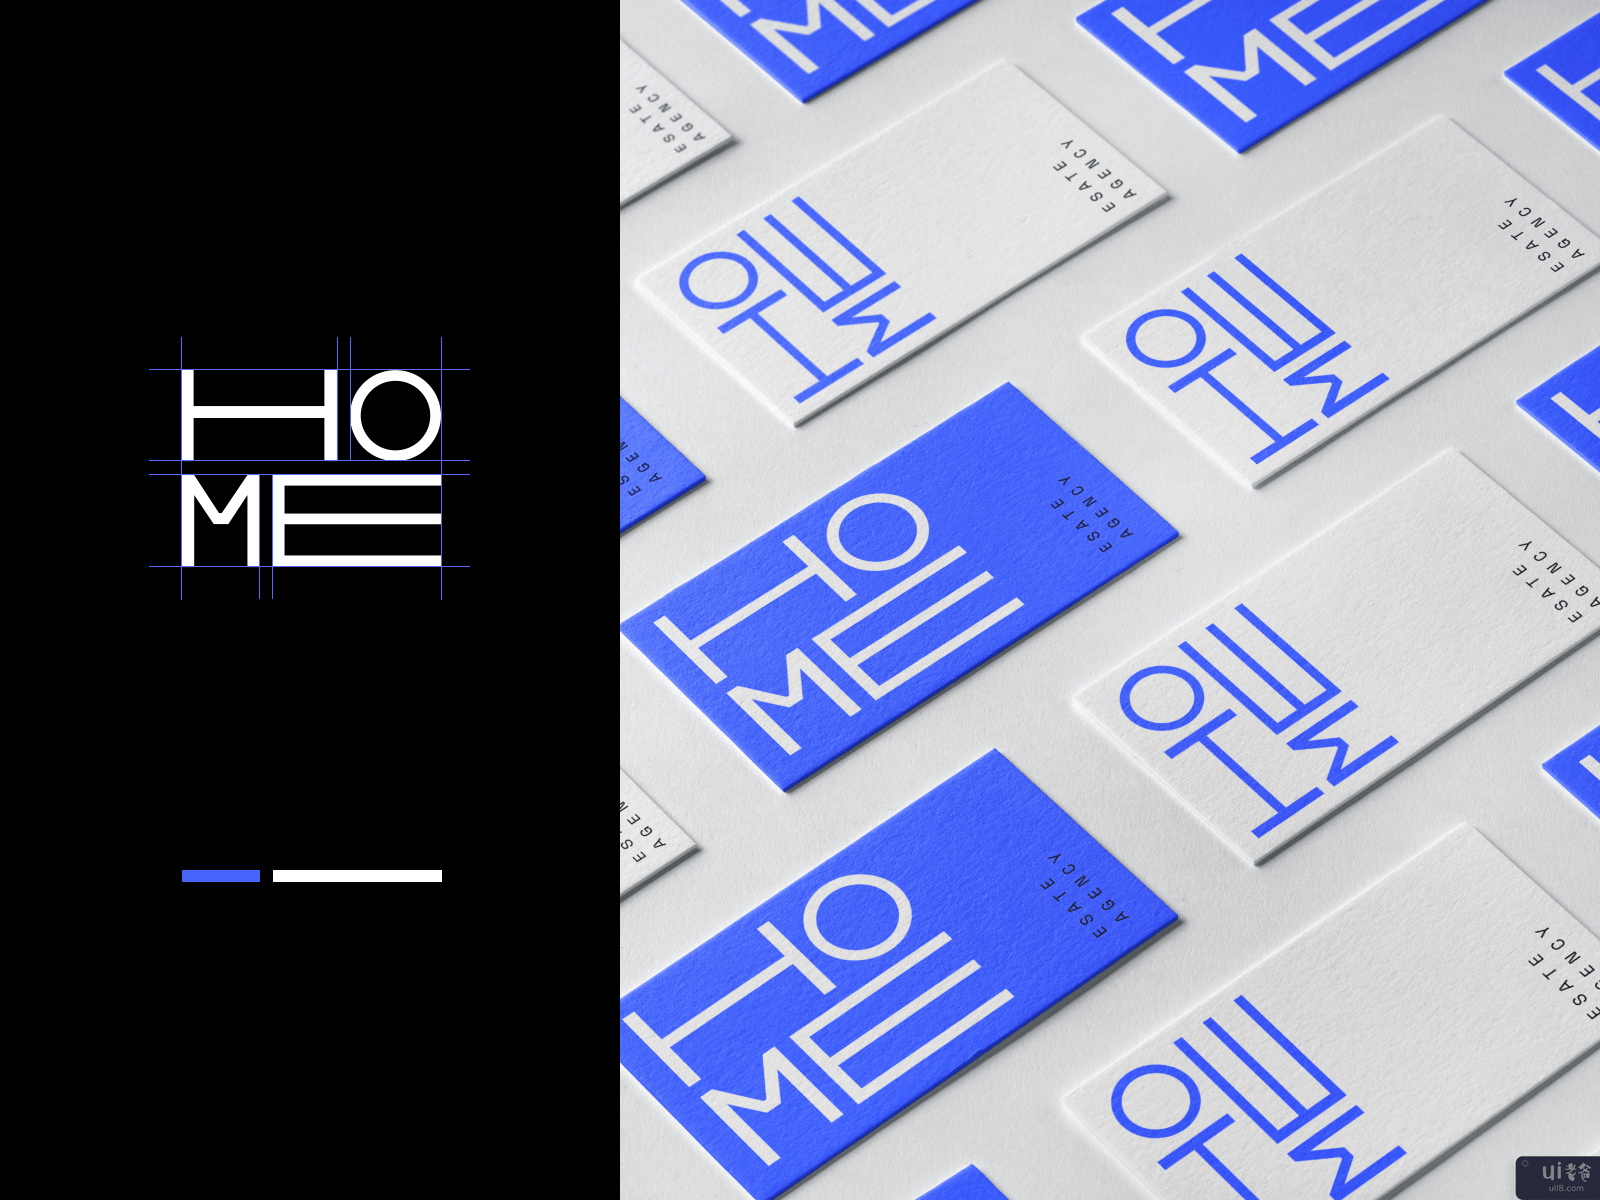 HoMe - 房地产公司的标志设计(HoMe - Logo Design for Real Estate Agency)插图